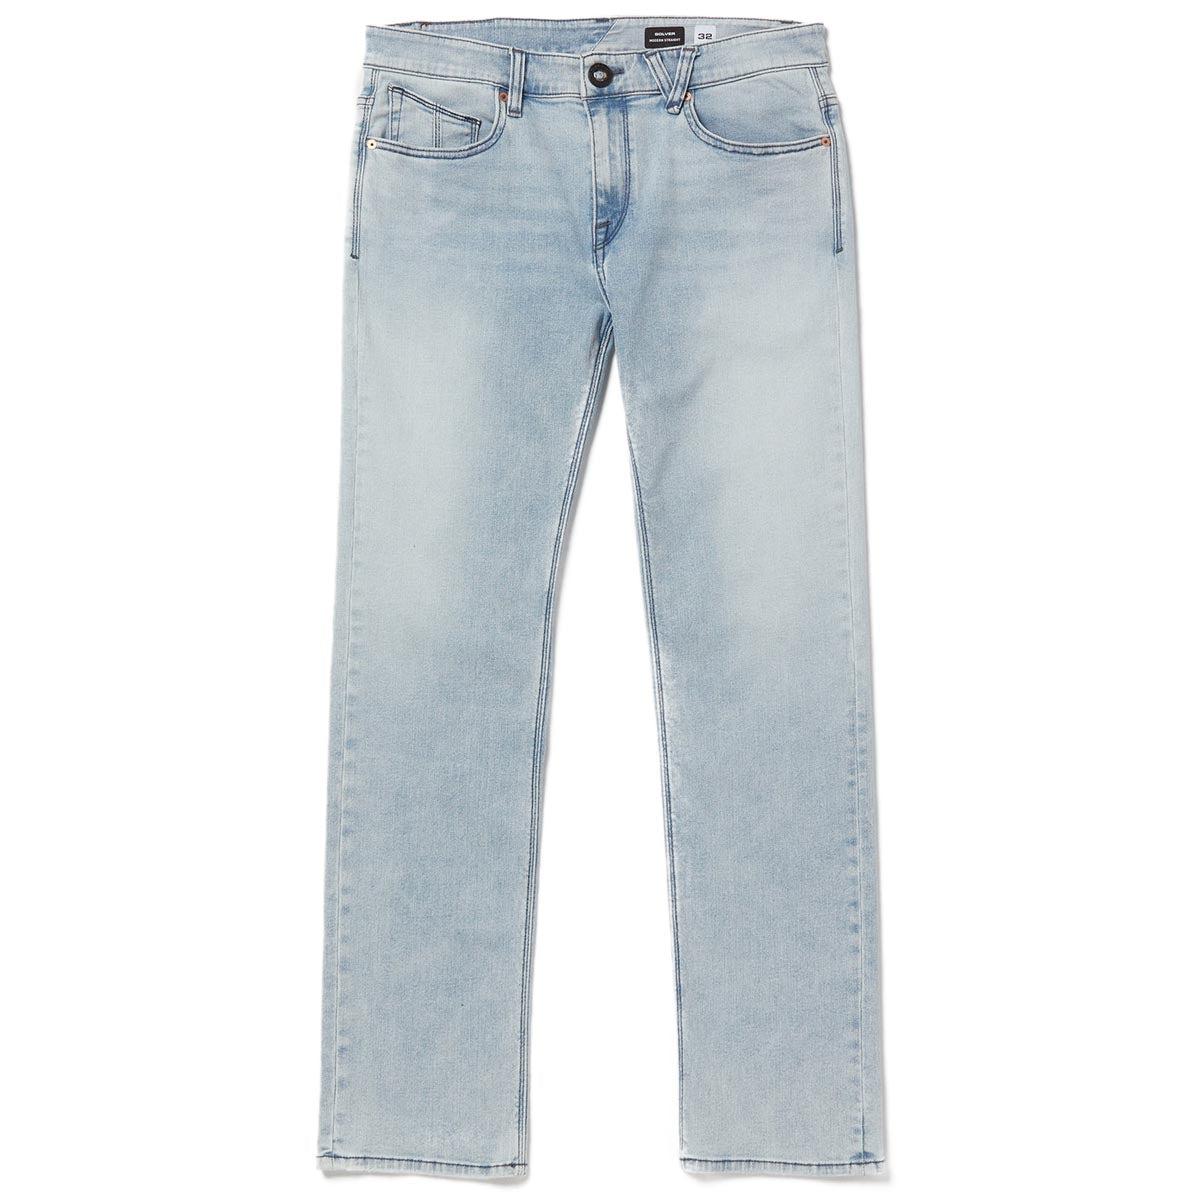 Volcom Solver Denim Jeans - Powder Blue image 1